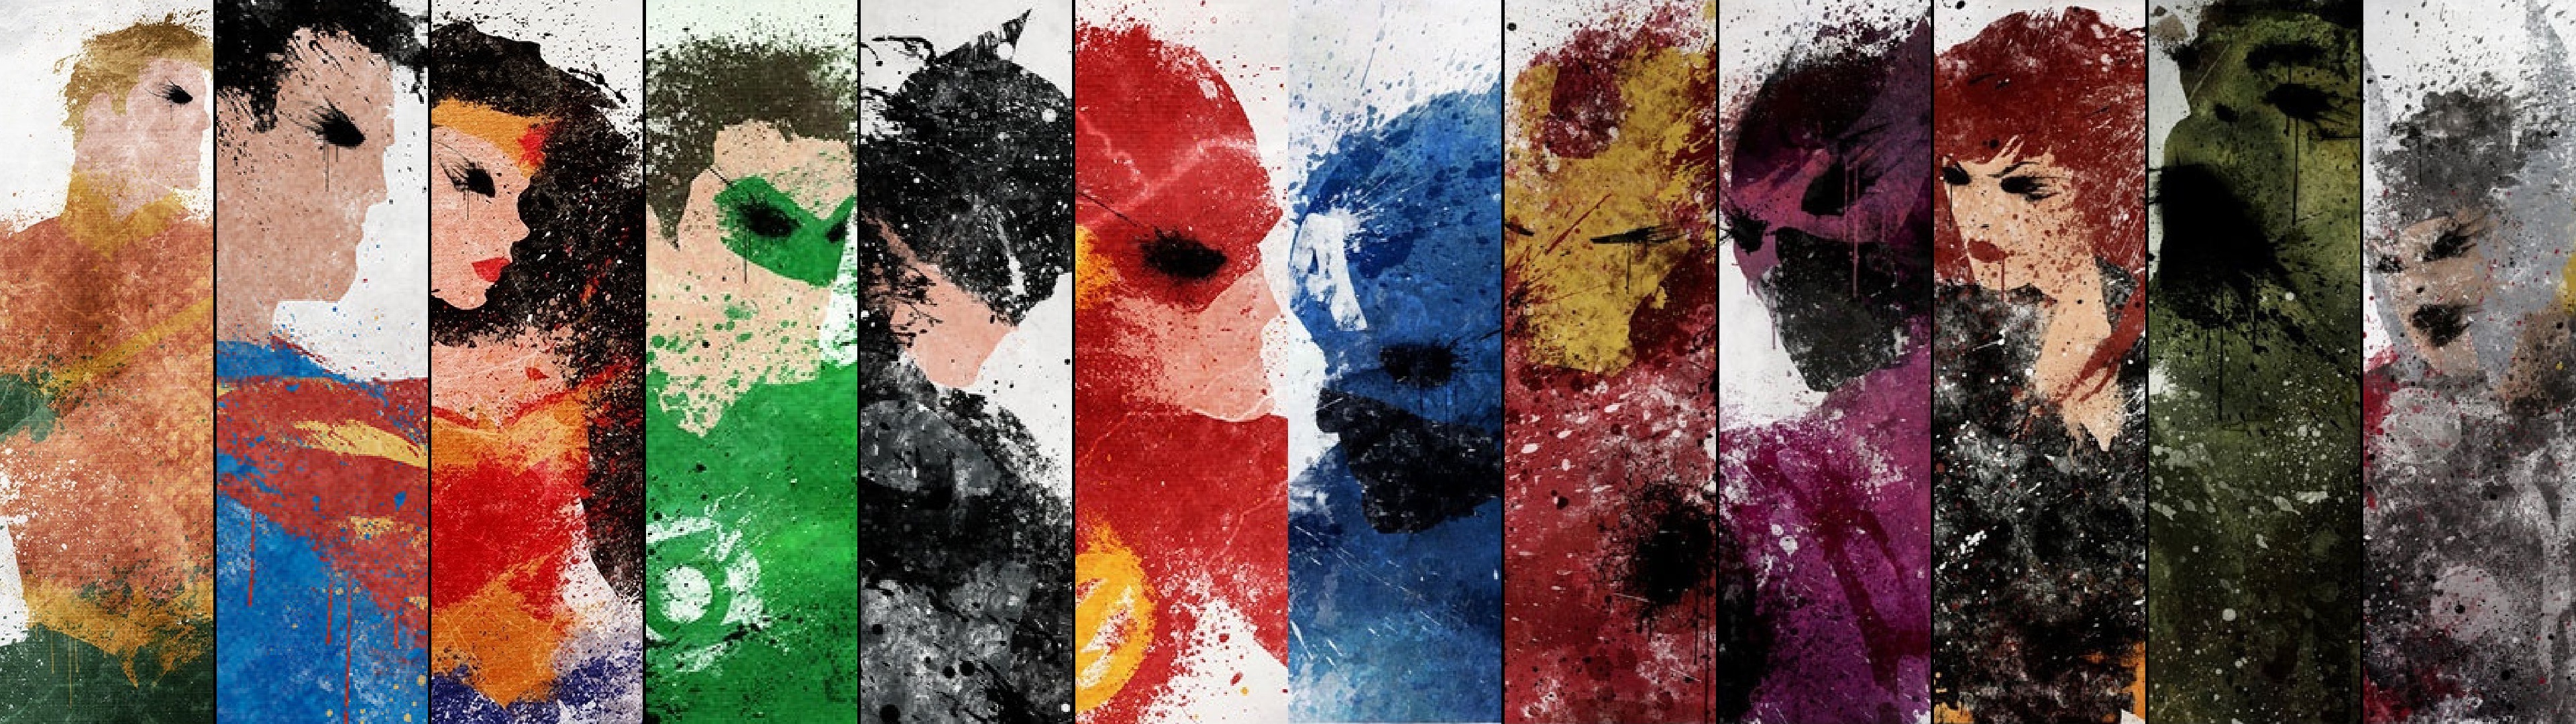 Splash Art: Justice League vs. Avengers Wallpaper 3840 x